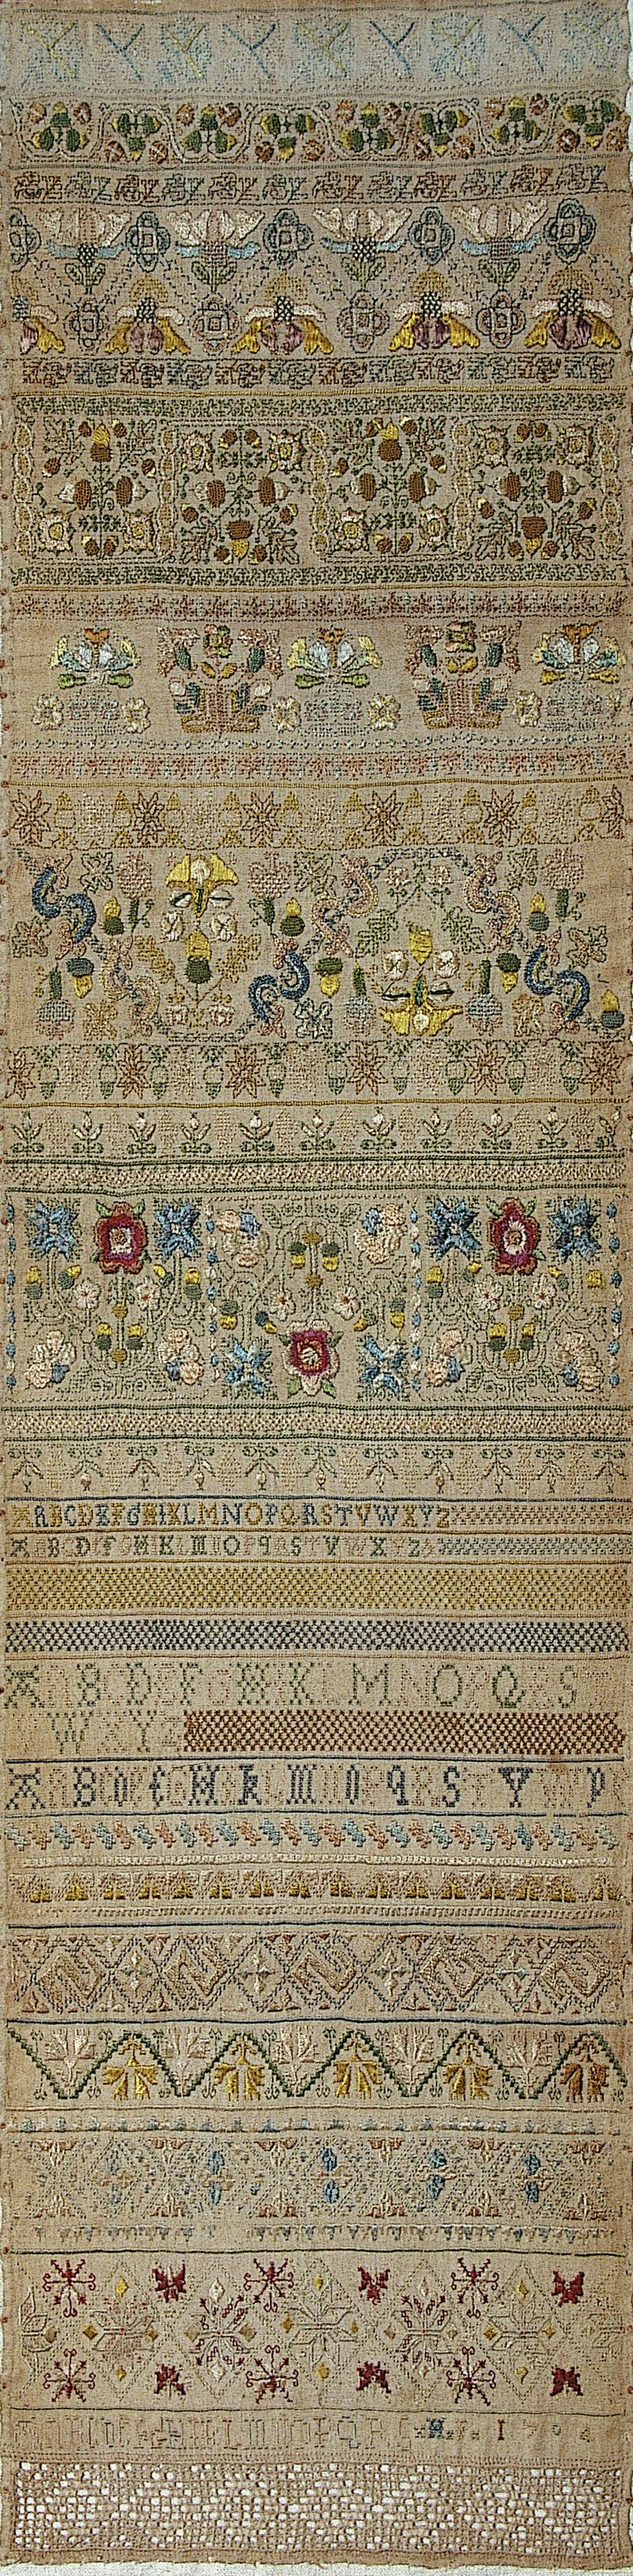 Sampler (motifs, stitches & alphabet), made in England, 1704